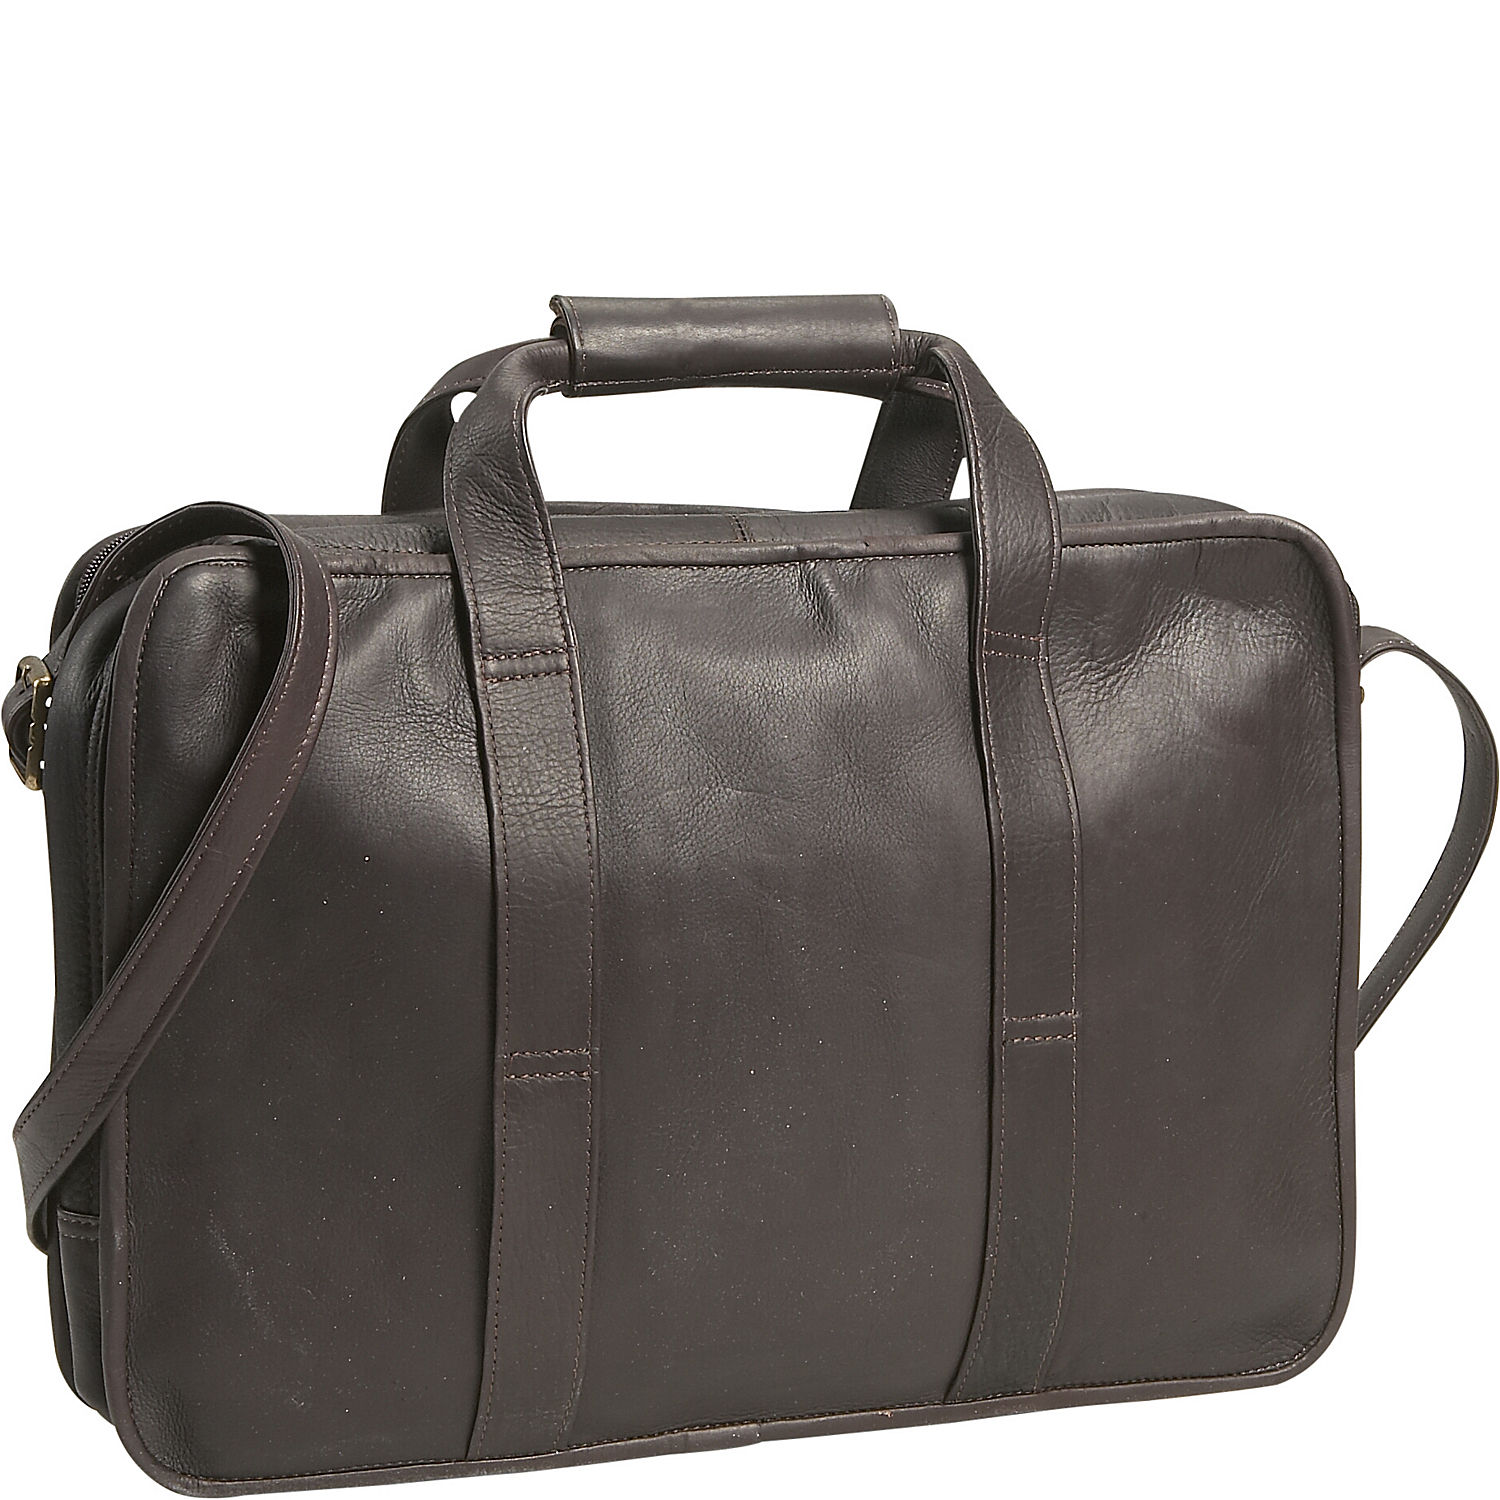 David King Leather Multi Pocket Expandable Laptop Bag | eBay